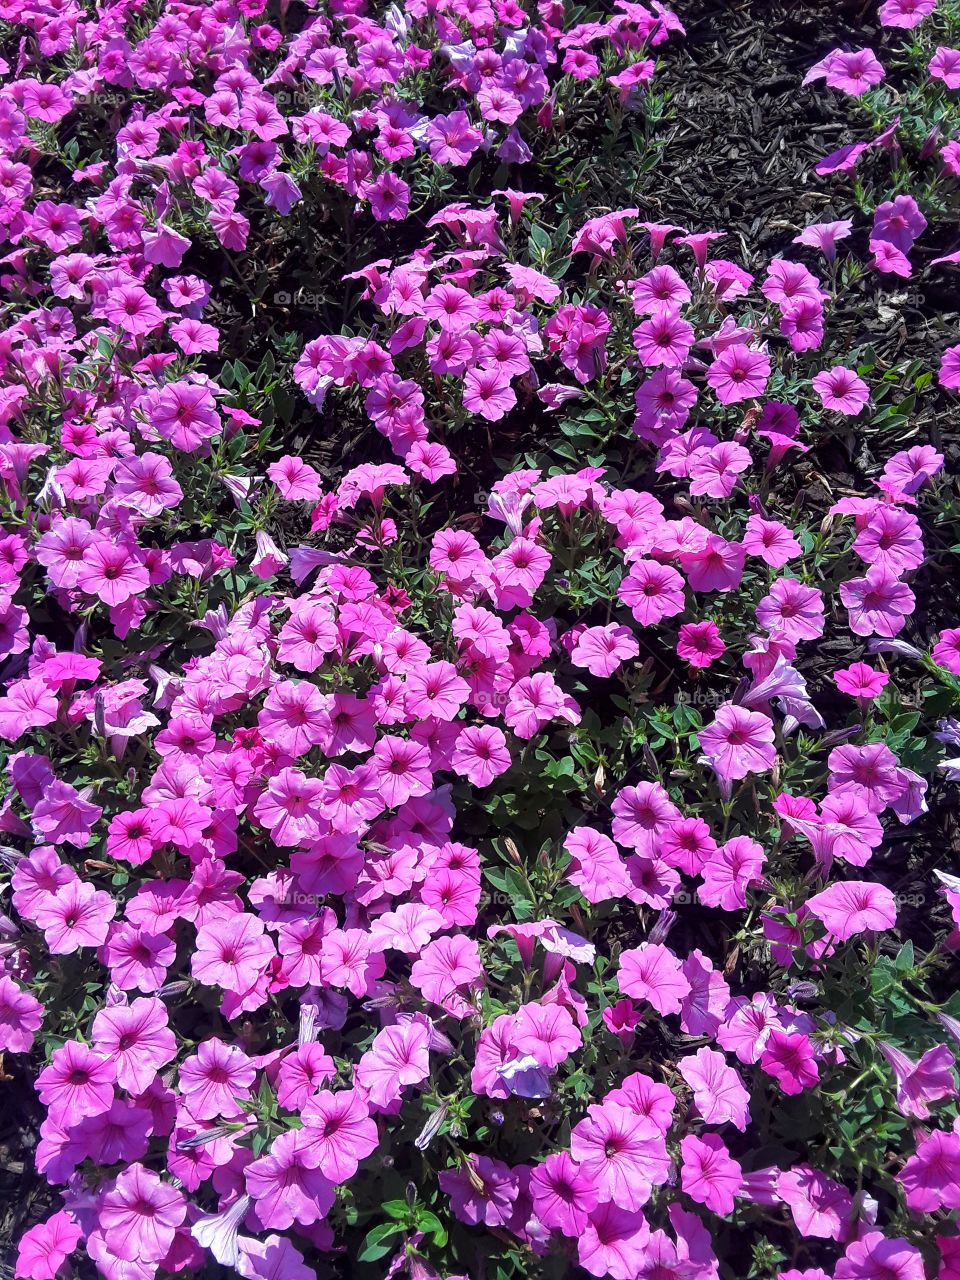 Purple Petunia Flowers In Grass